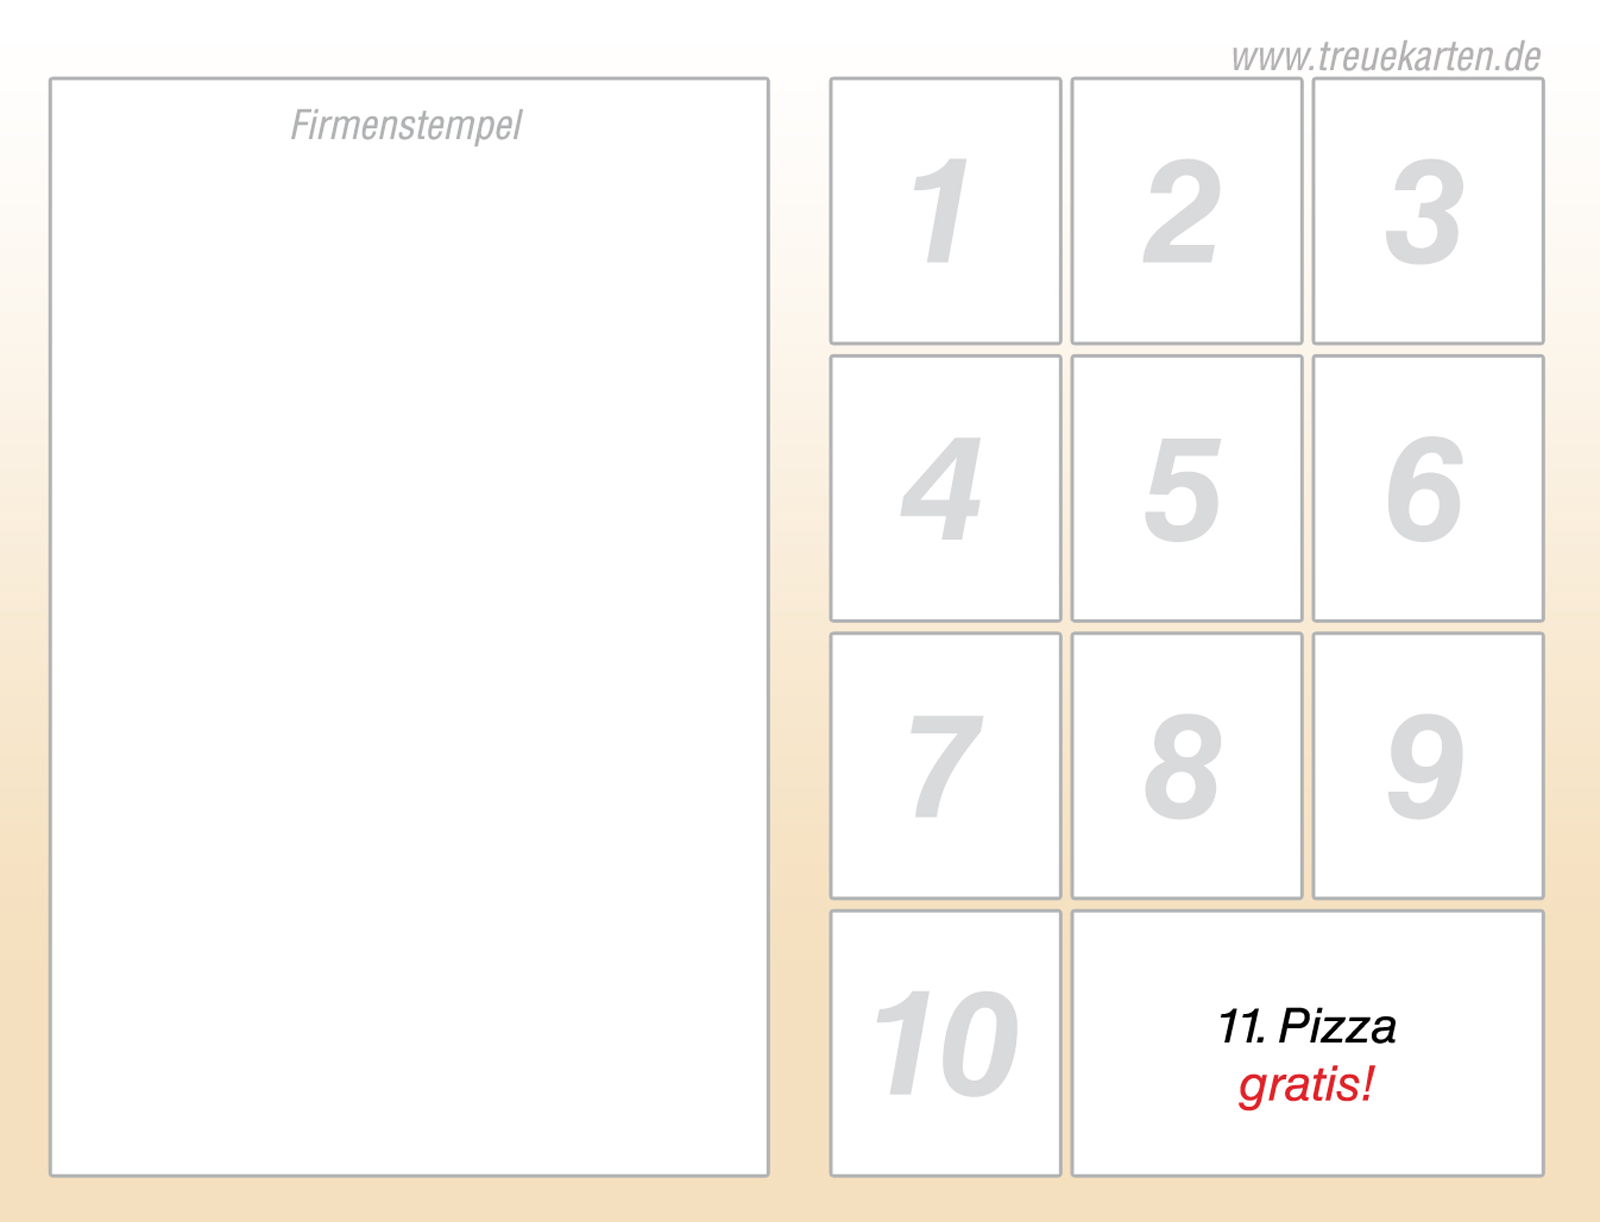 Treuekarte Bonuskarte "Pizzeria" Kundenkarte Stempelkarte Premium Papier Perlmutt